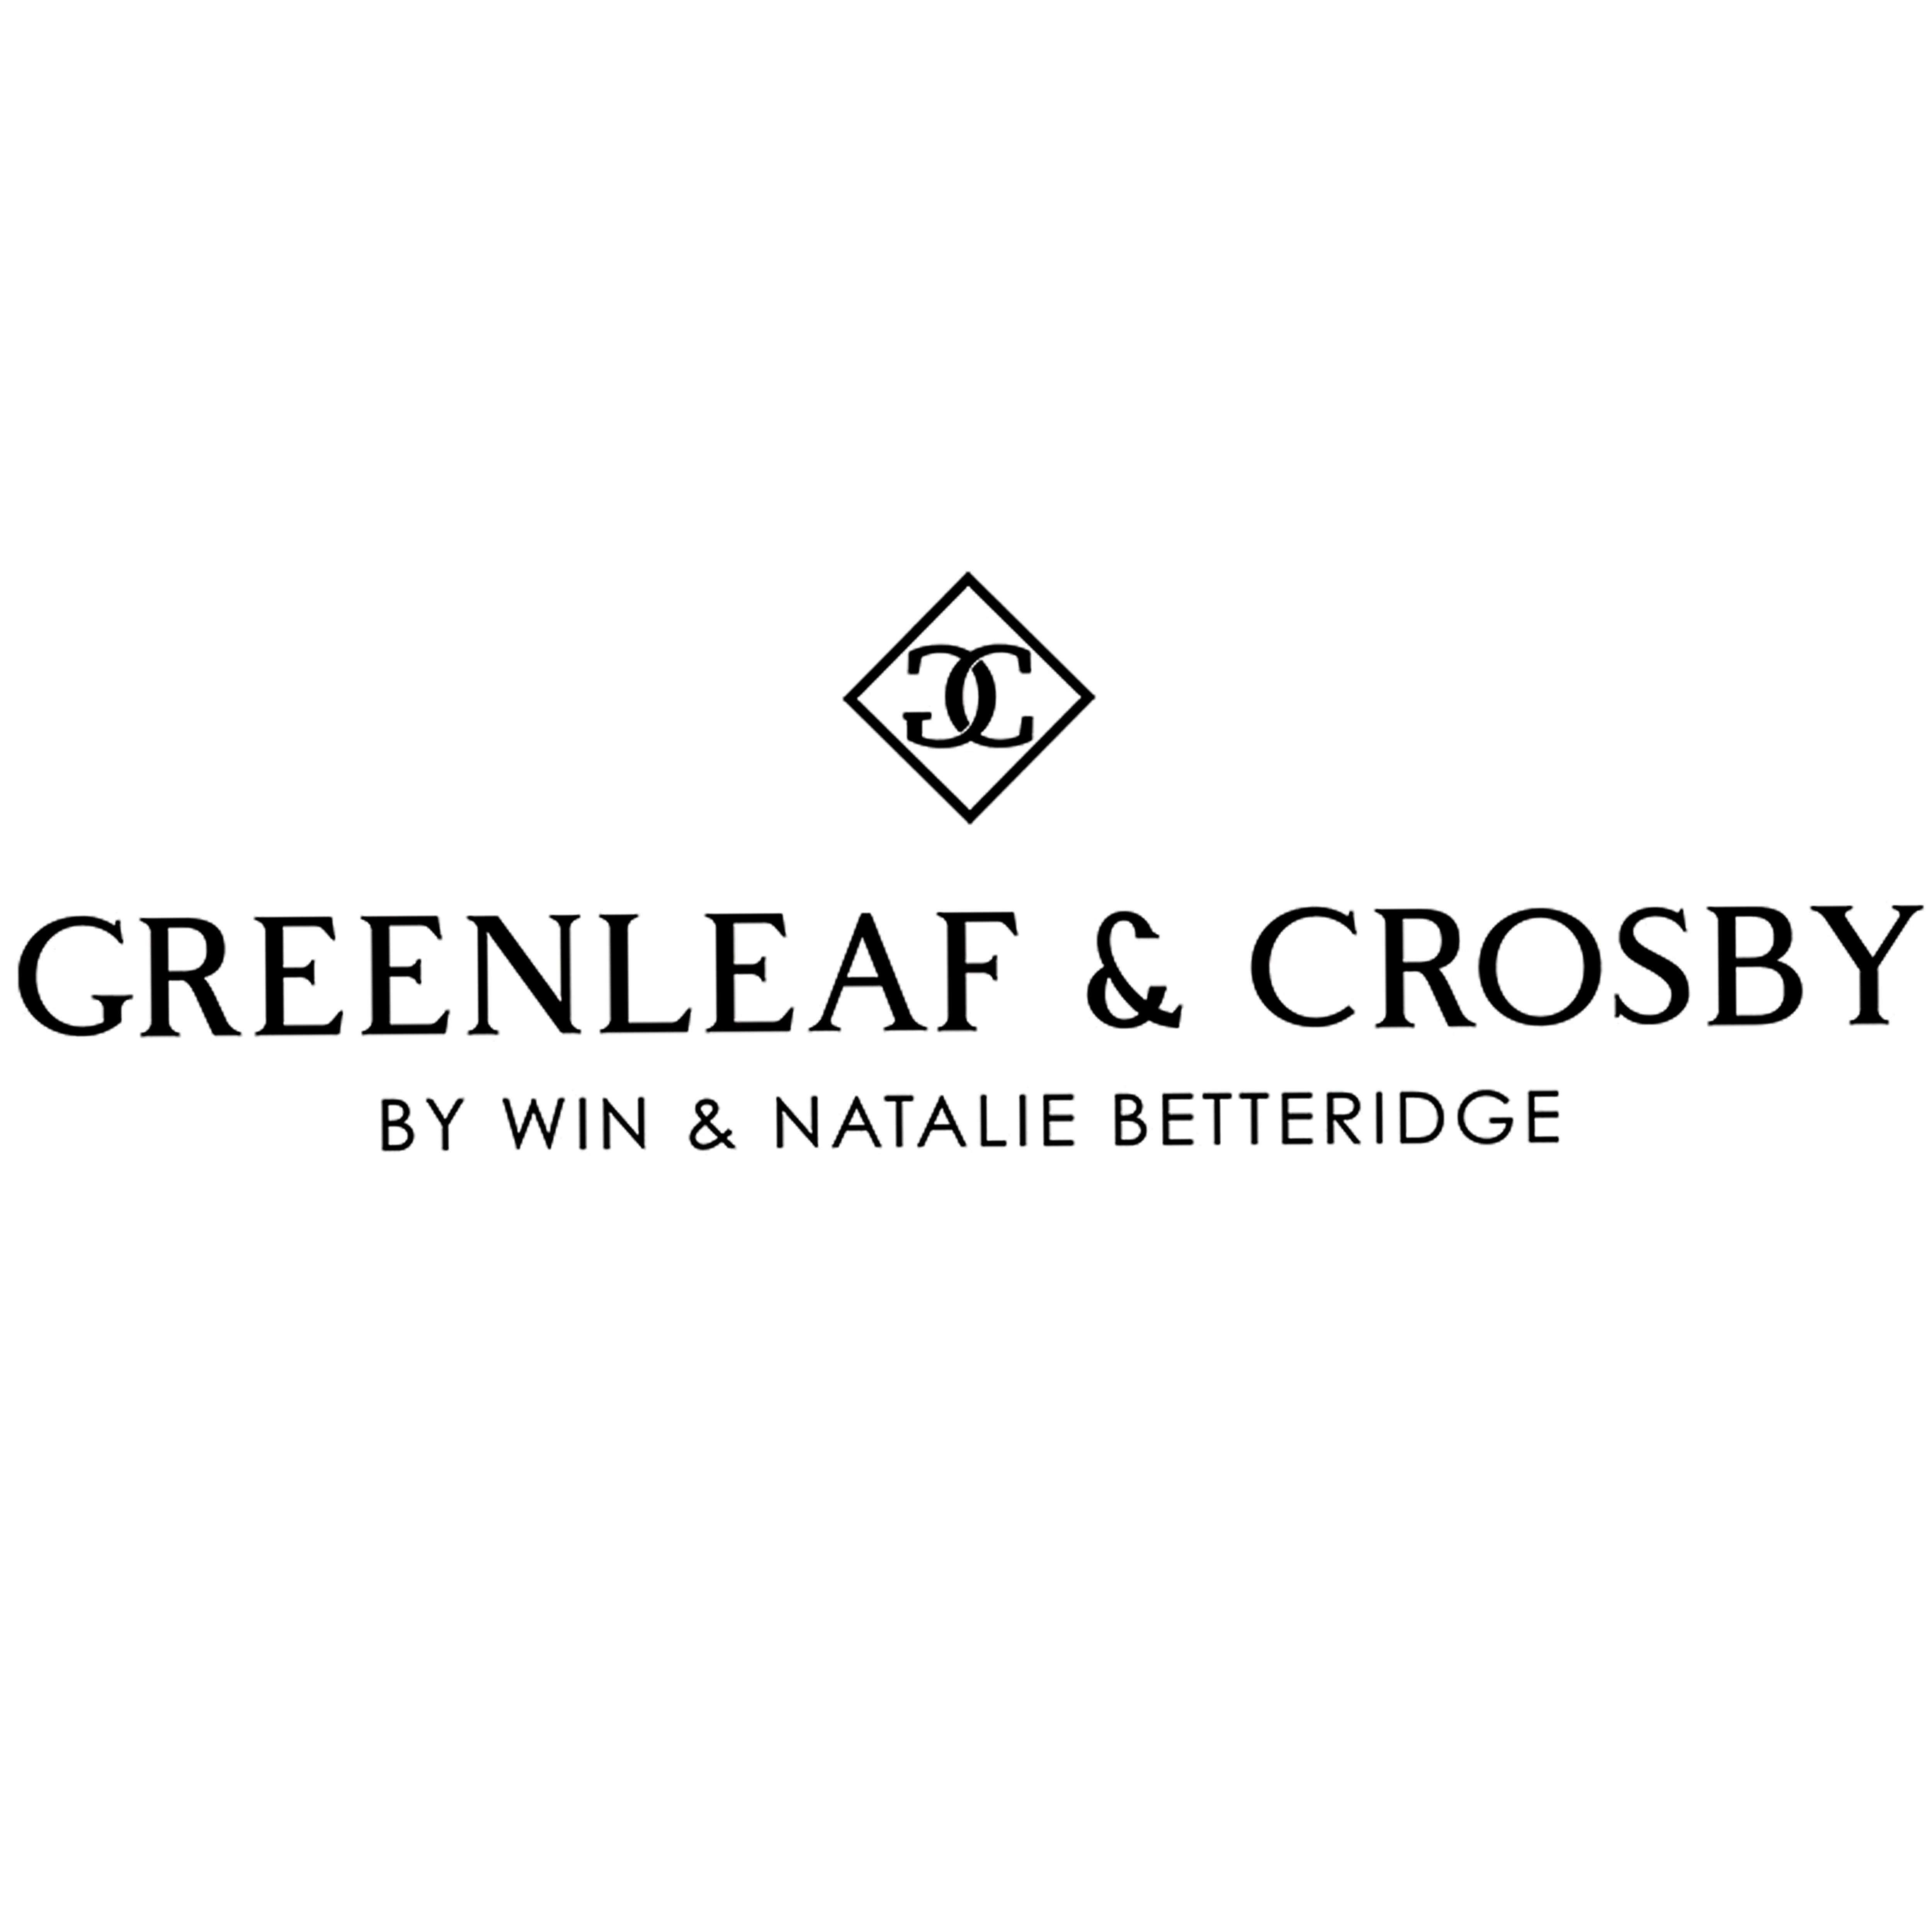 Greenleaf & Crosby by W. Betteridge